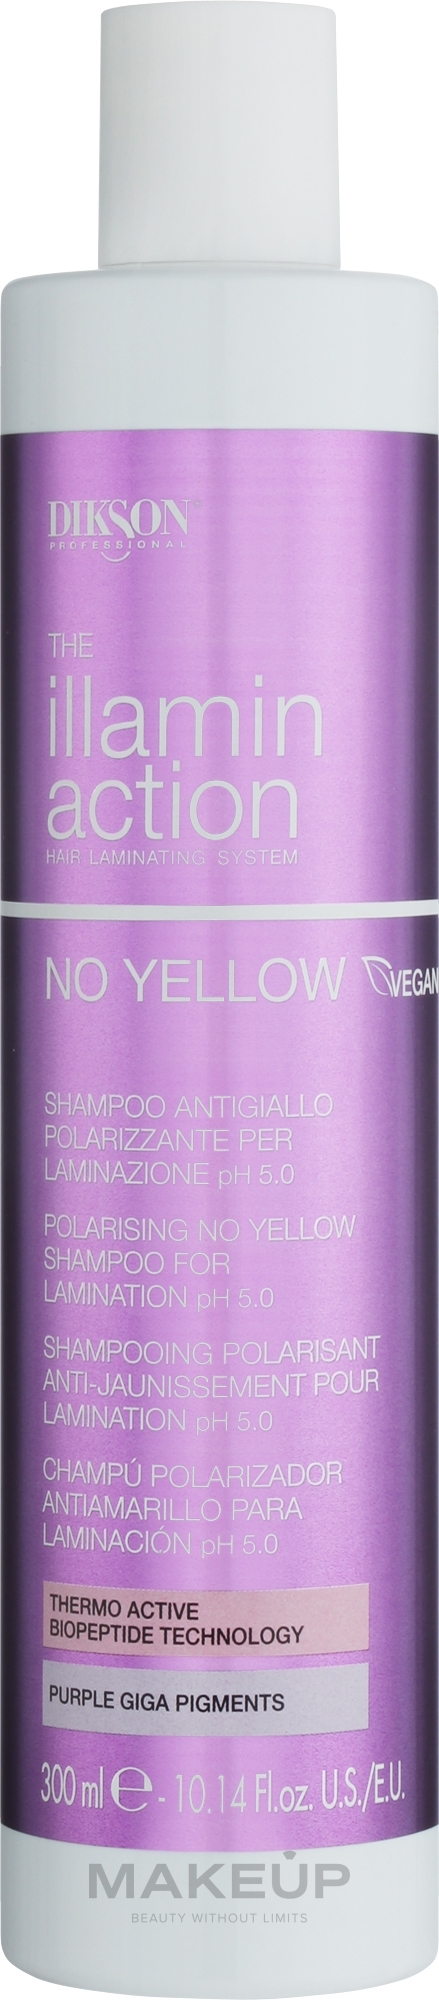 Gelbtöne neutralisierendes Shampoo - Dikson Illaminaction No Yellow Polarising No Yellow Shampoo For Lamination pH 5.5 — Bild 300 ml